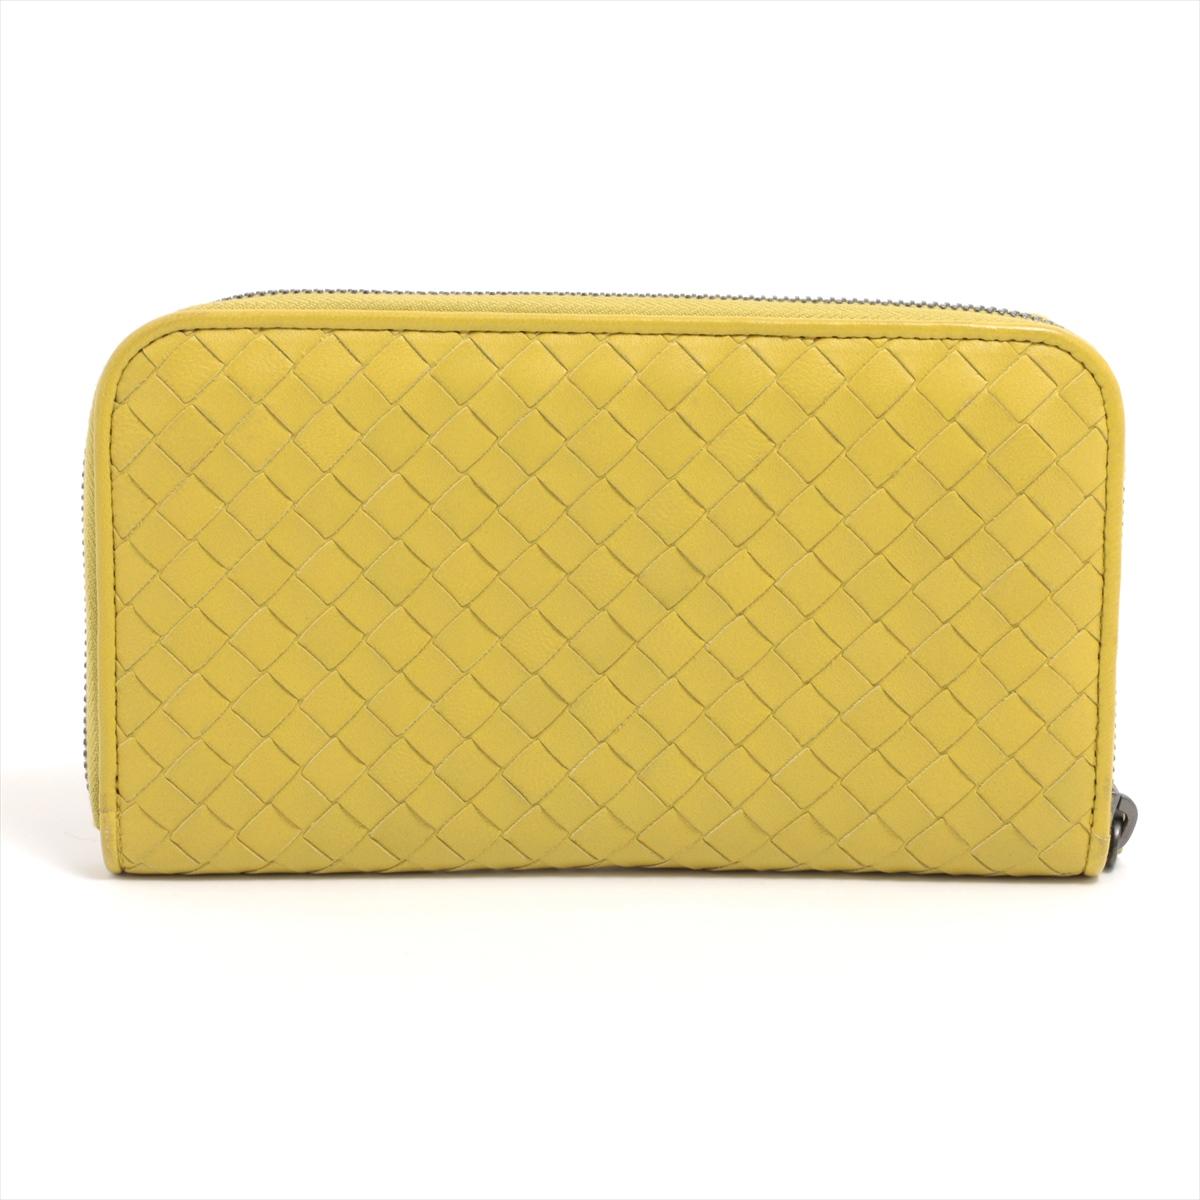 Bottega Veneta Intrecciato Leather Zippy Wallet Yellow Gold In Good Condition For Sale In Indianapolis, IN